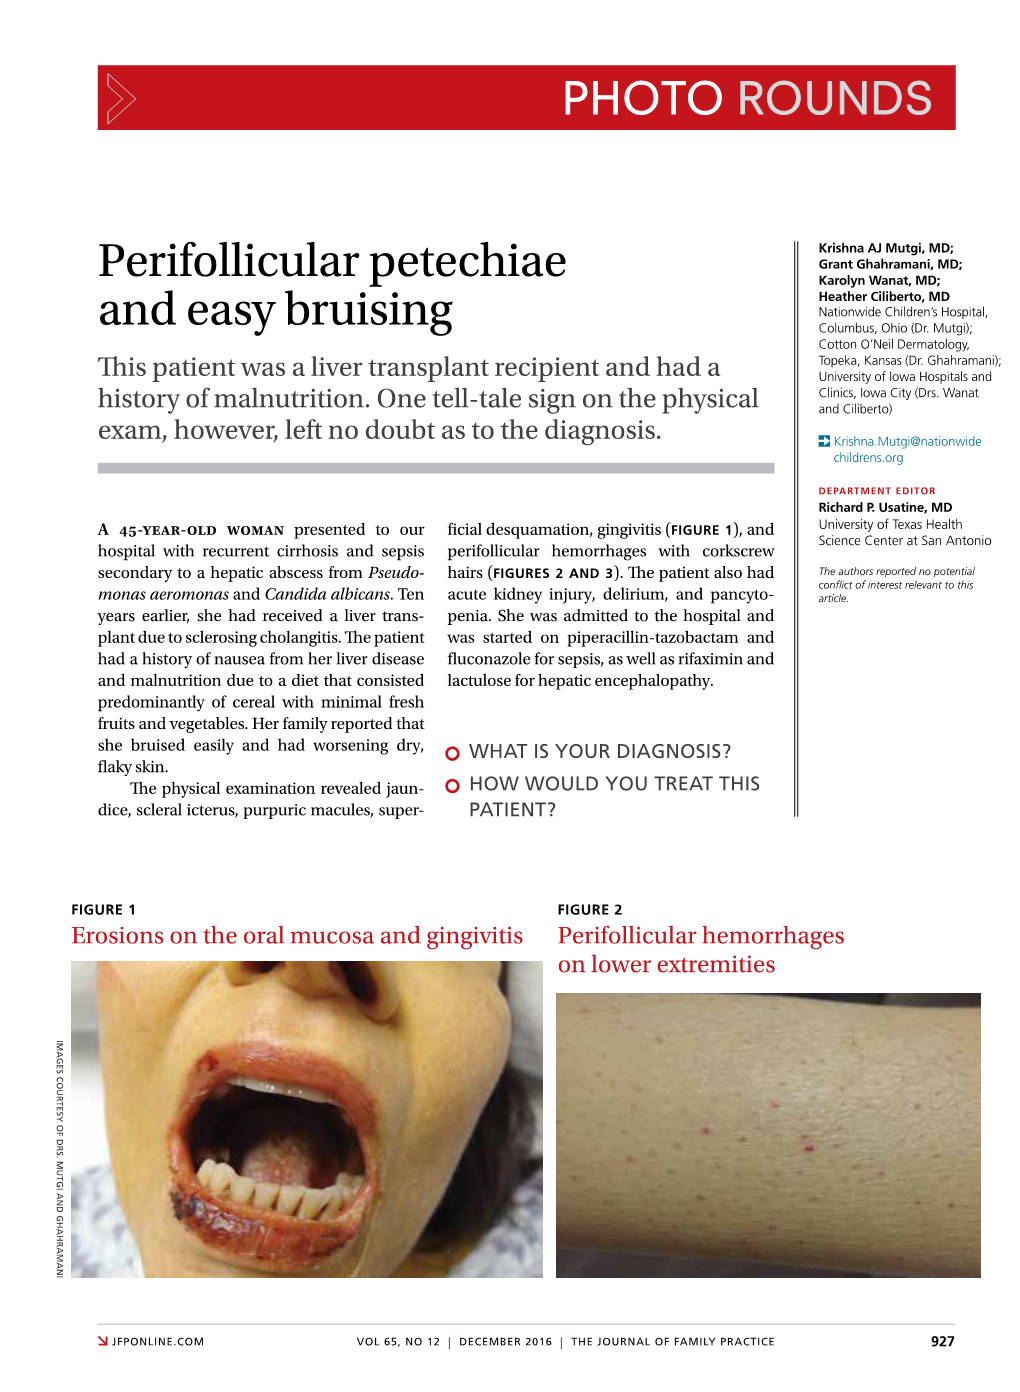 Perifollicular Petechiae and Easy Bruising